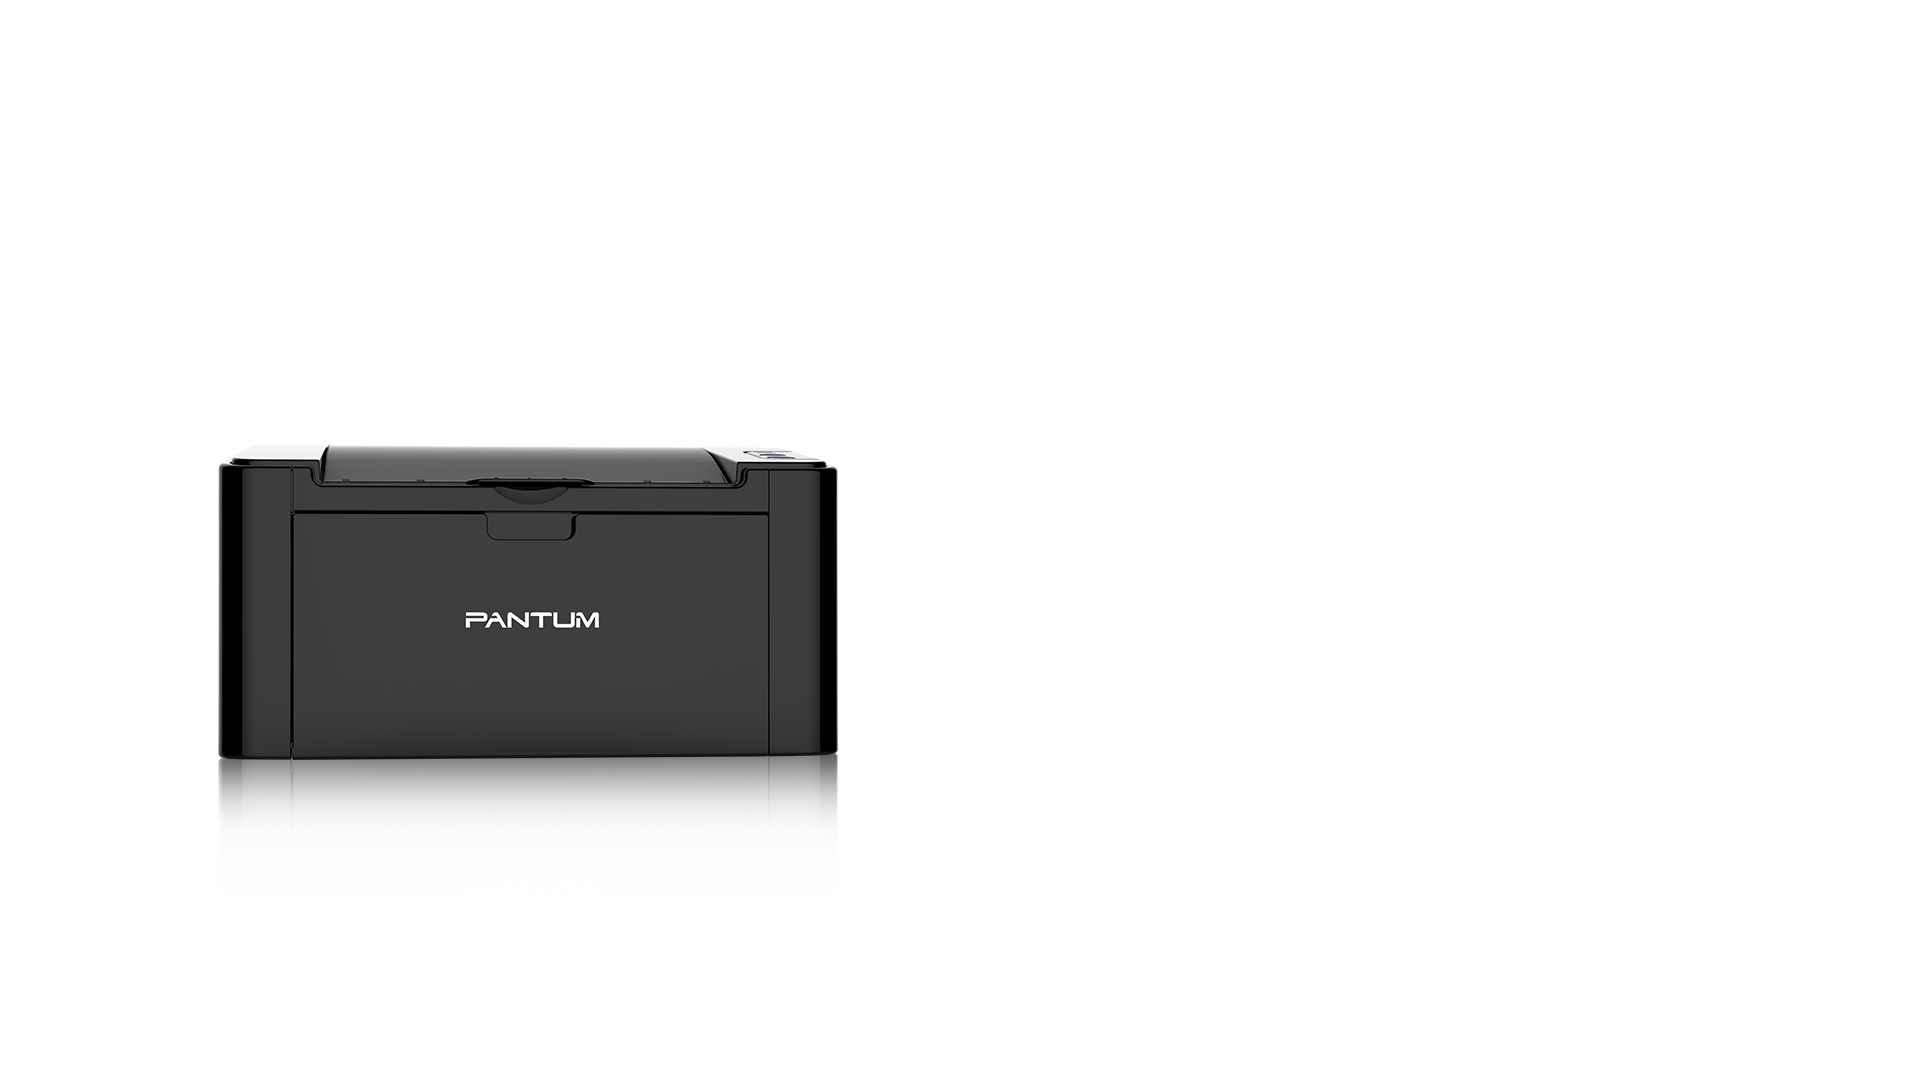 Imprimante laser compacte Pantum Superfast - P2500W - Silvergear